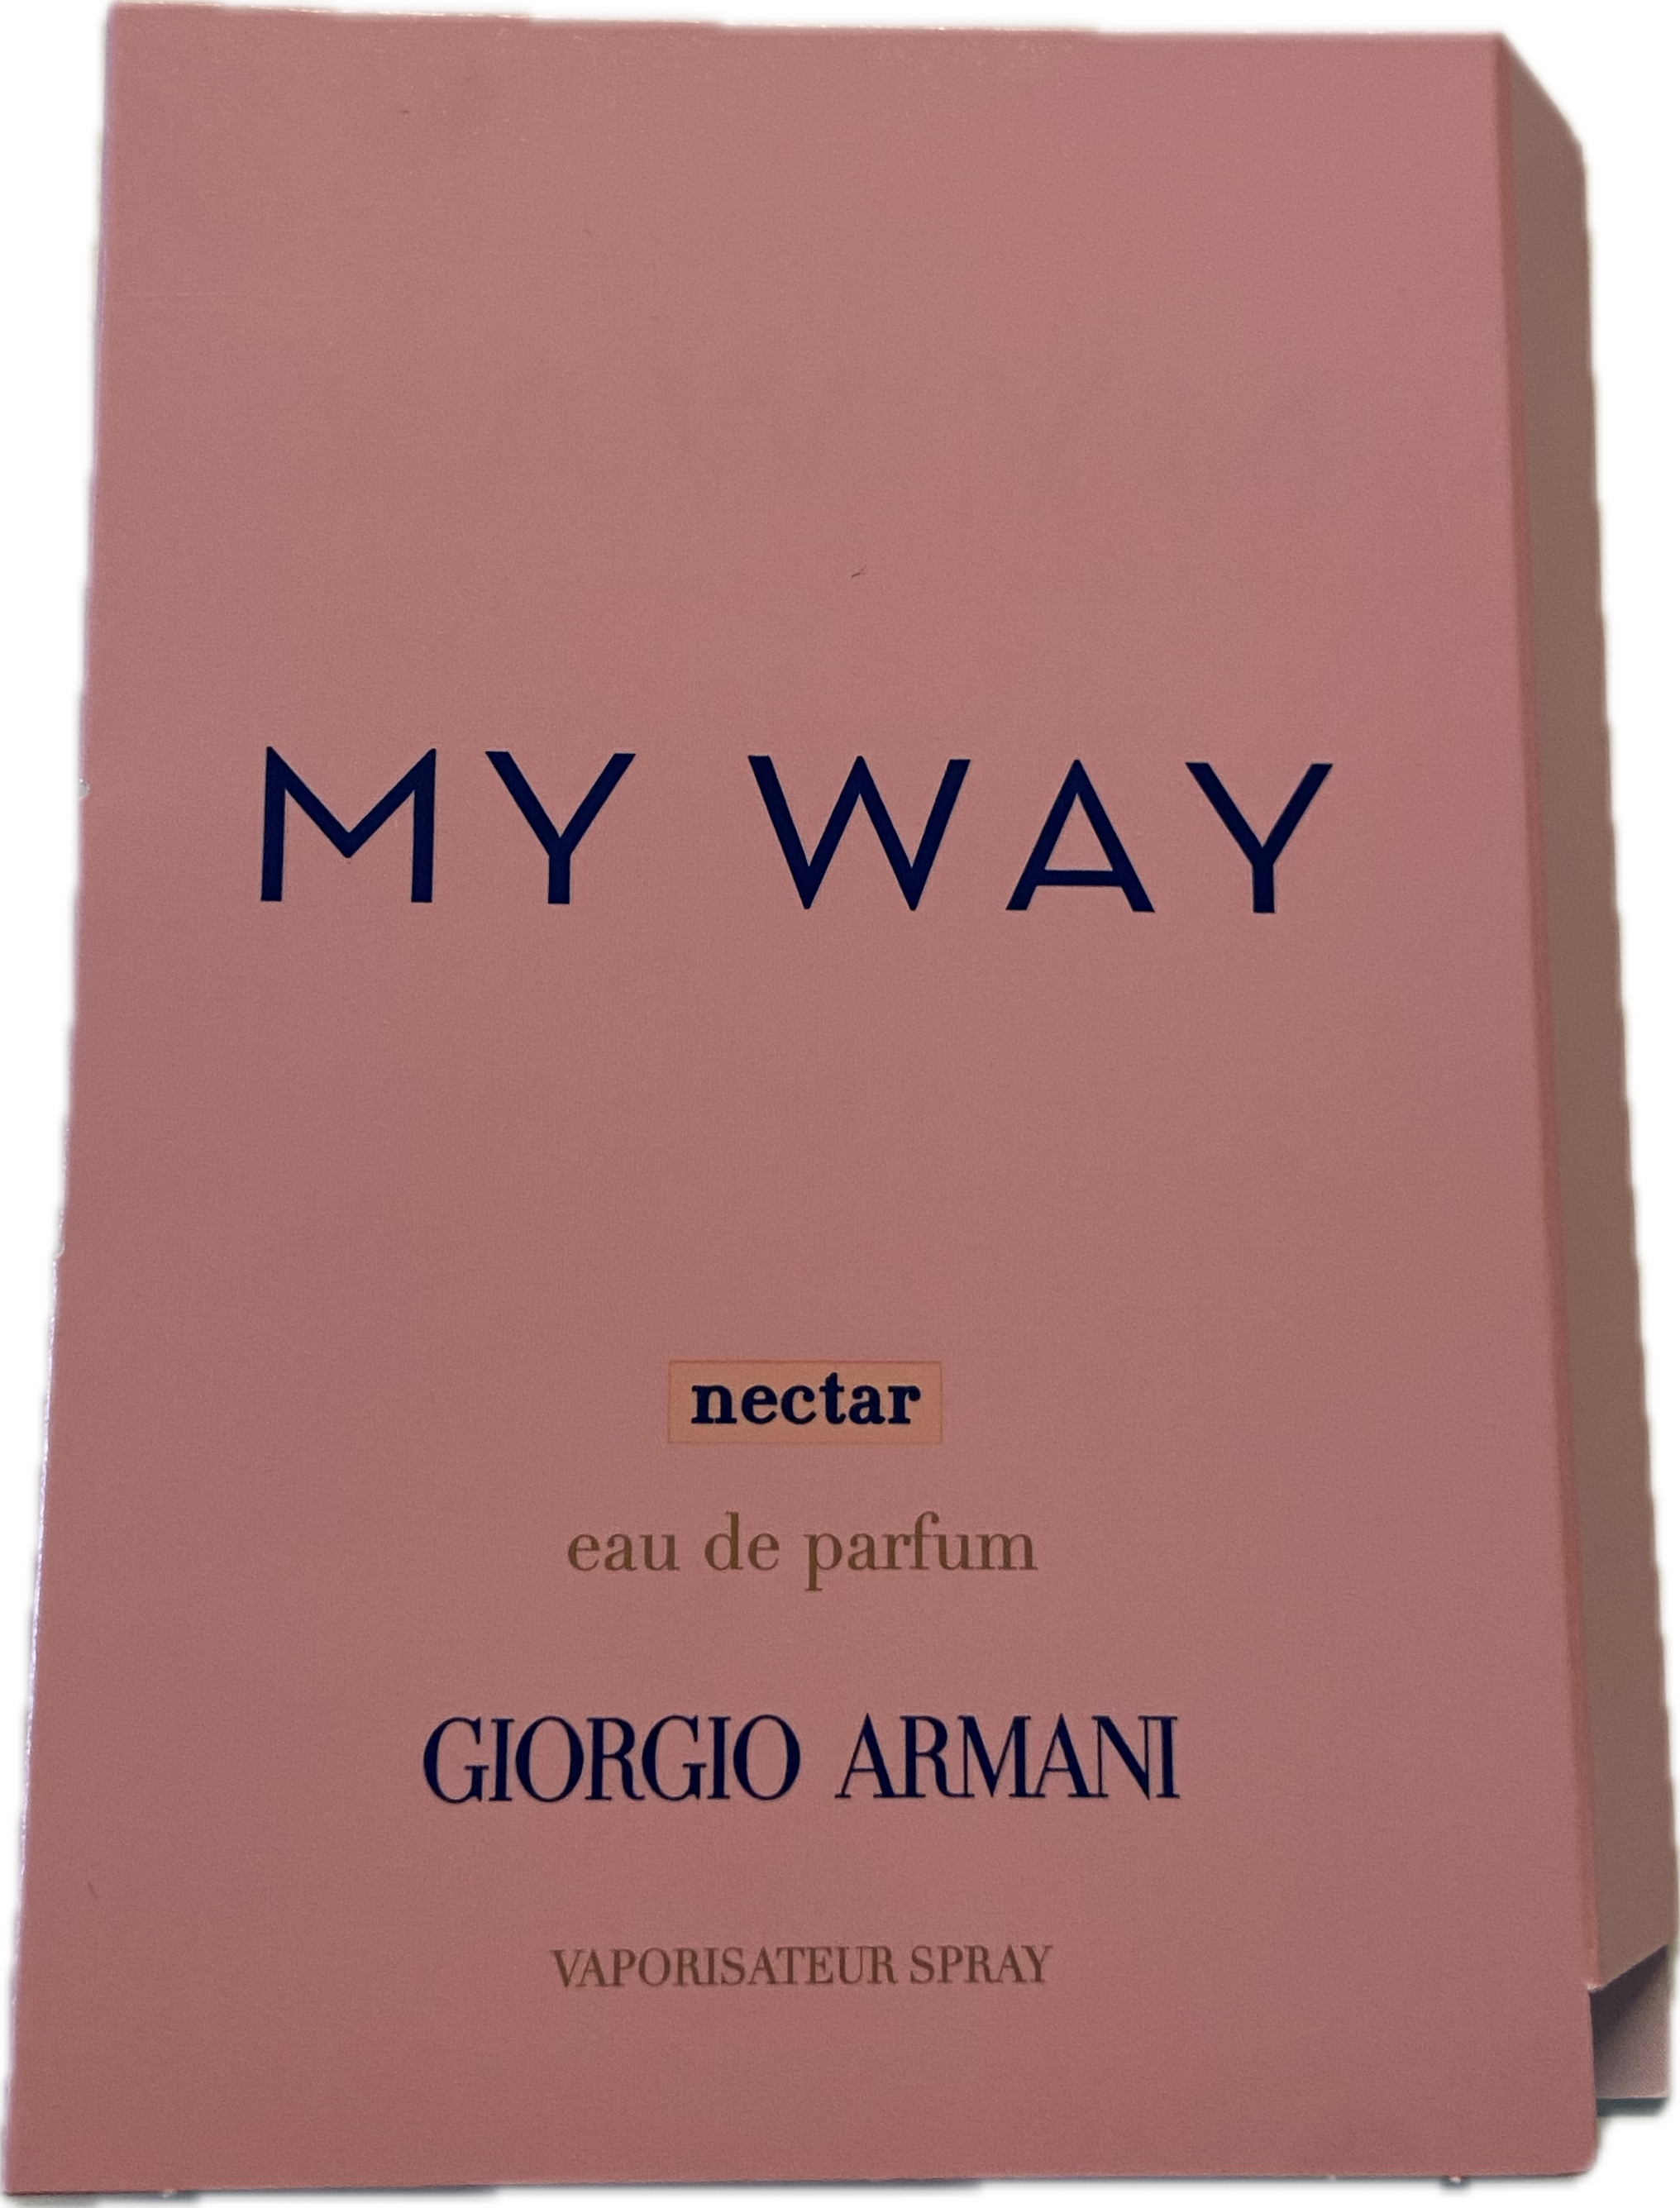 Giorgio Armani My Way Nectar, EDP - Illatminta